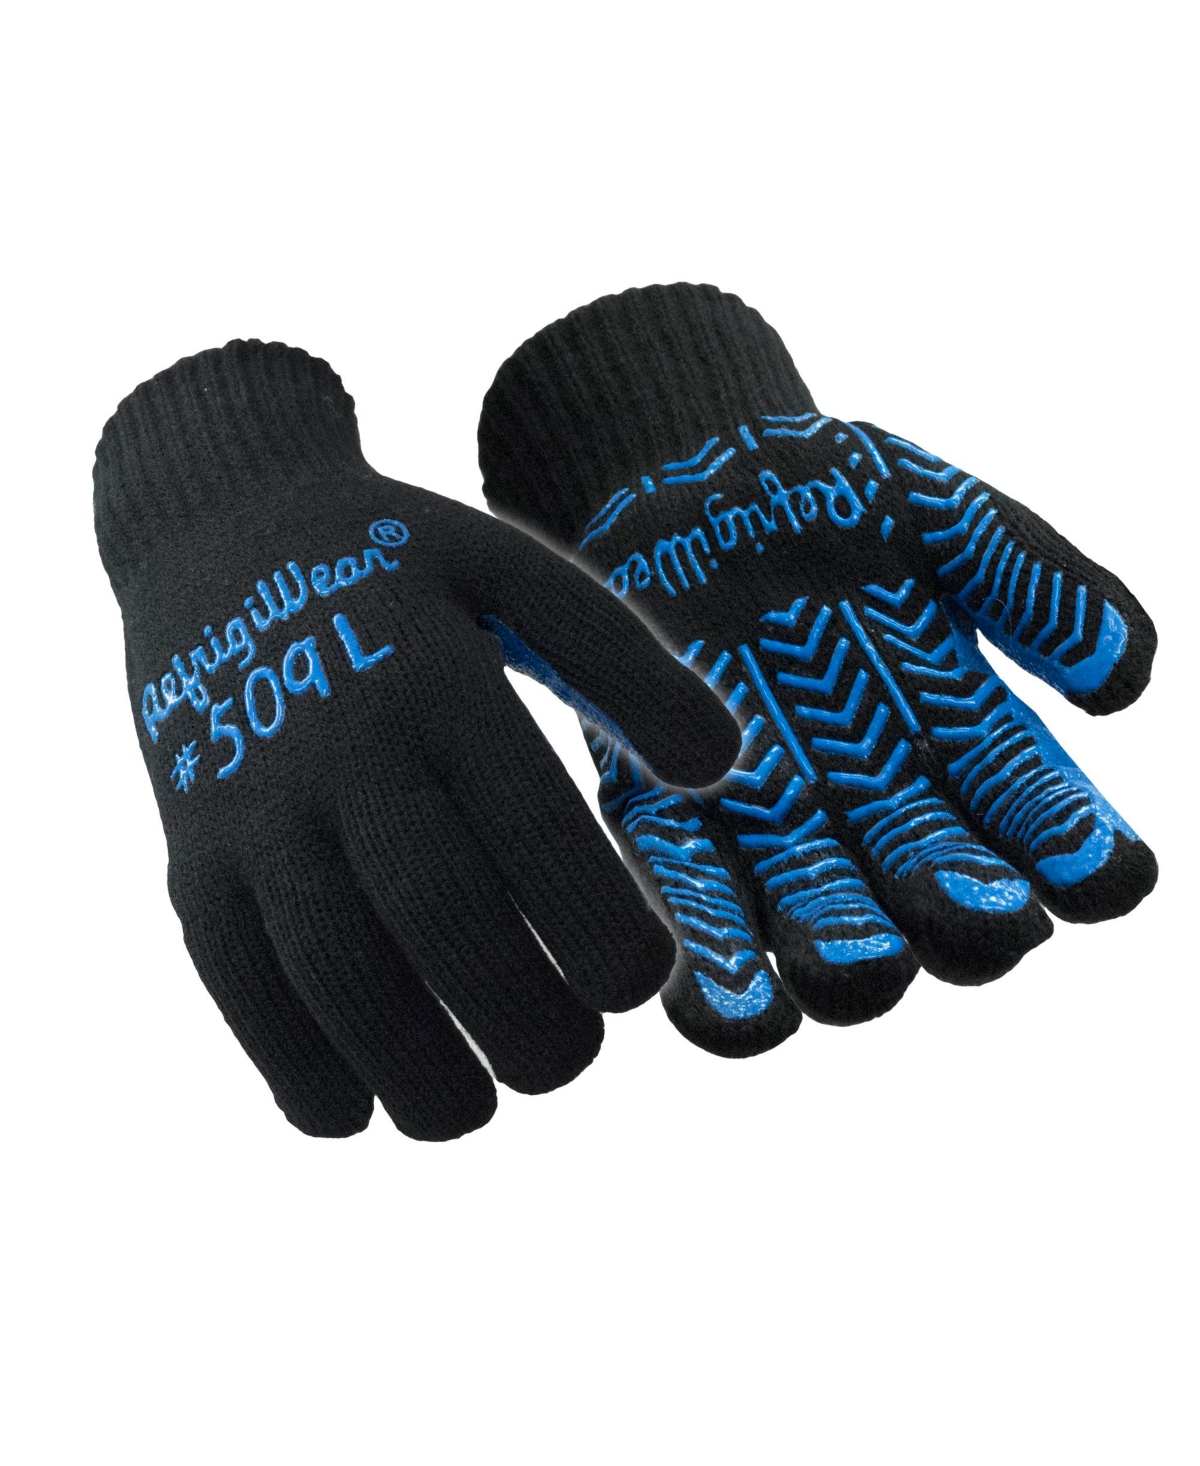 Men's Warm Dual Layer Palm Coated Herringbone Grip Work Gloves - Black